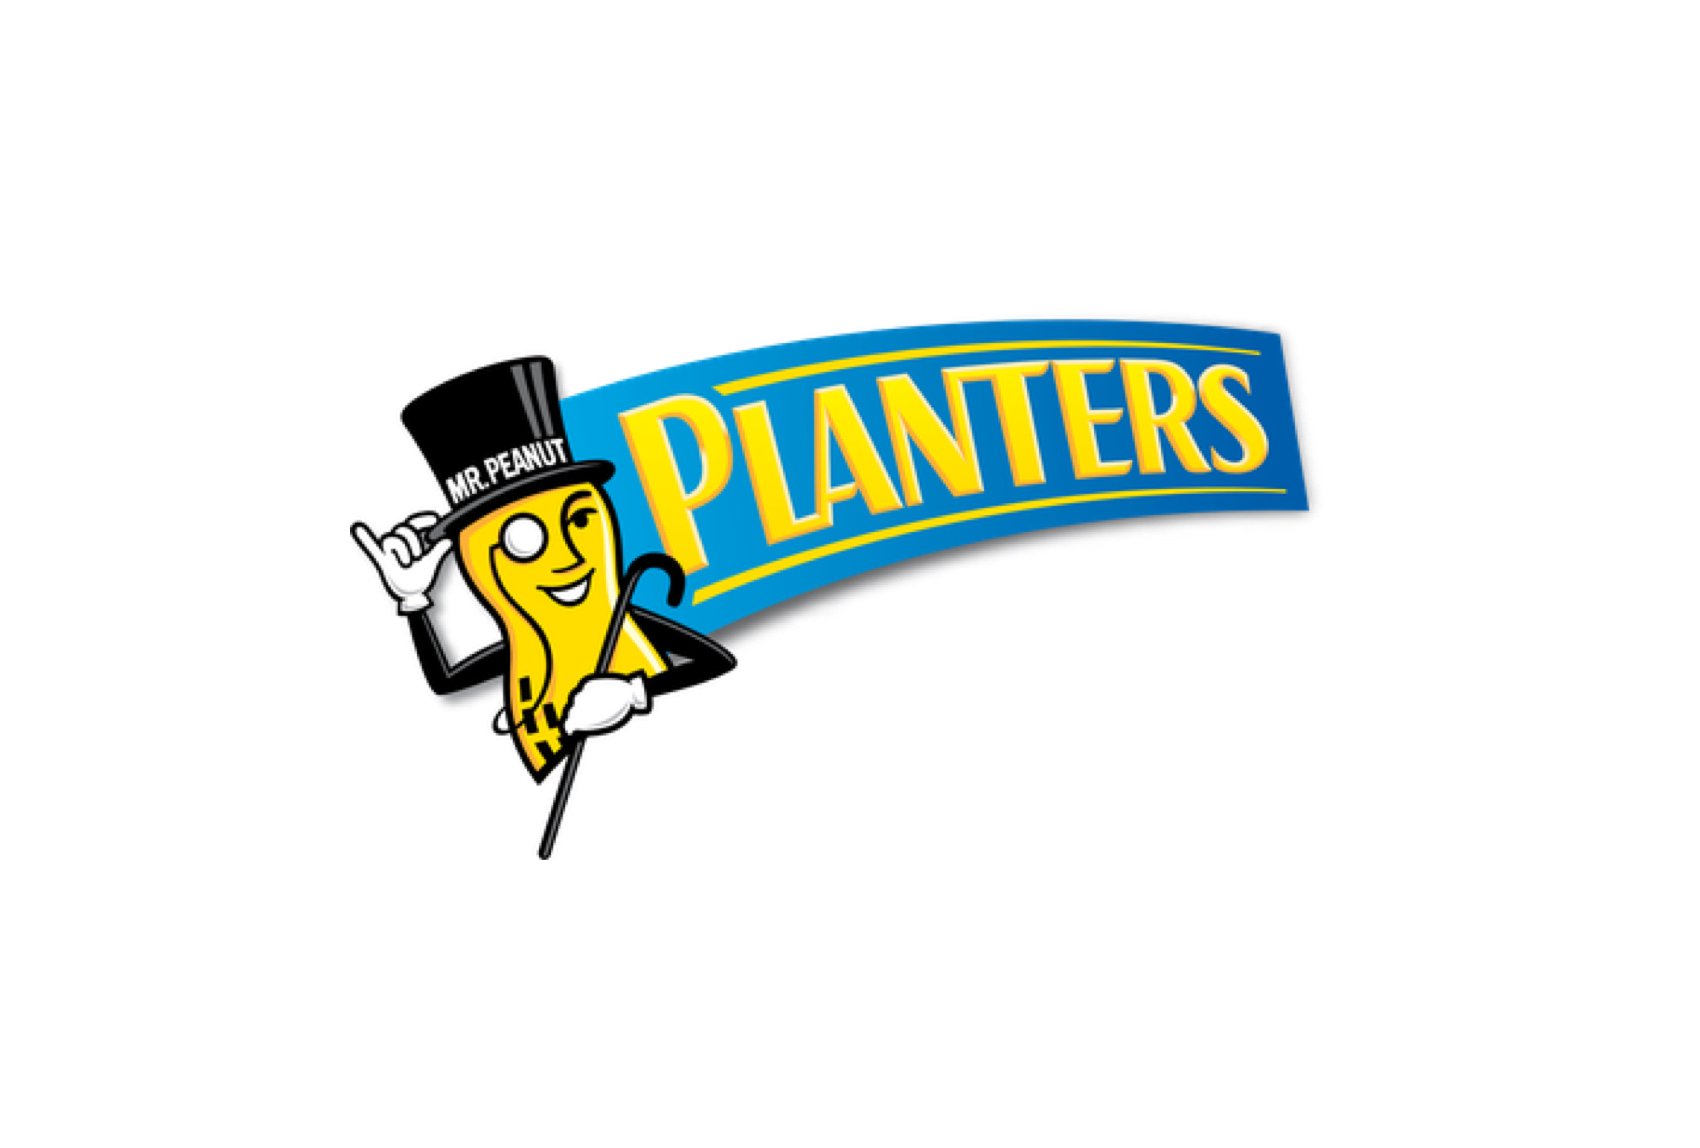 mascot-logo-planters